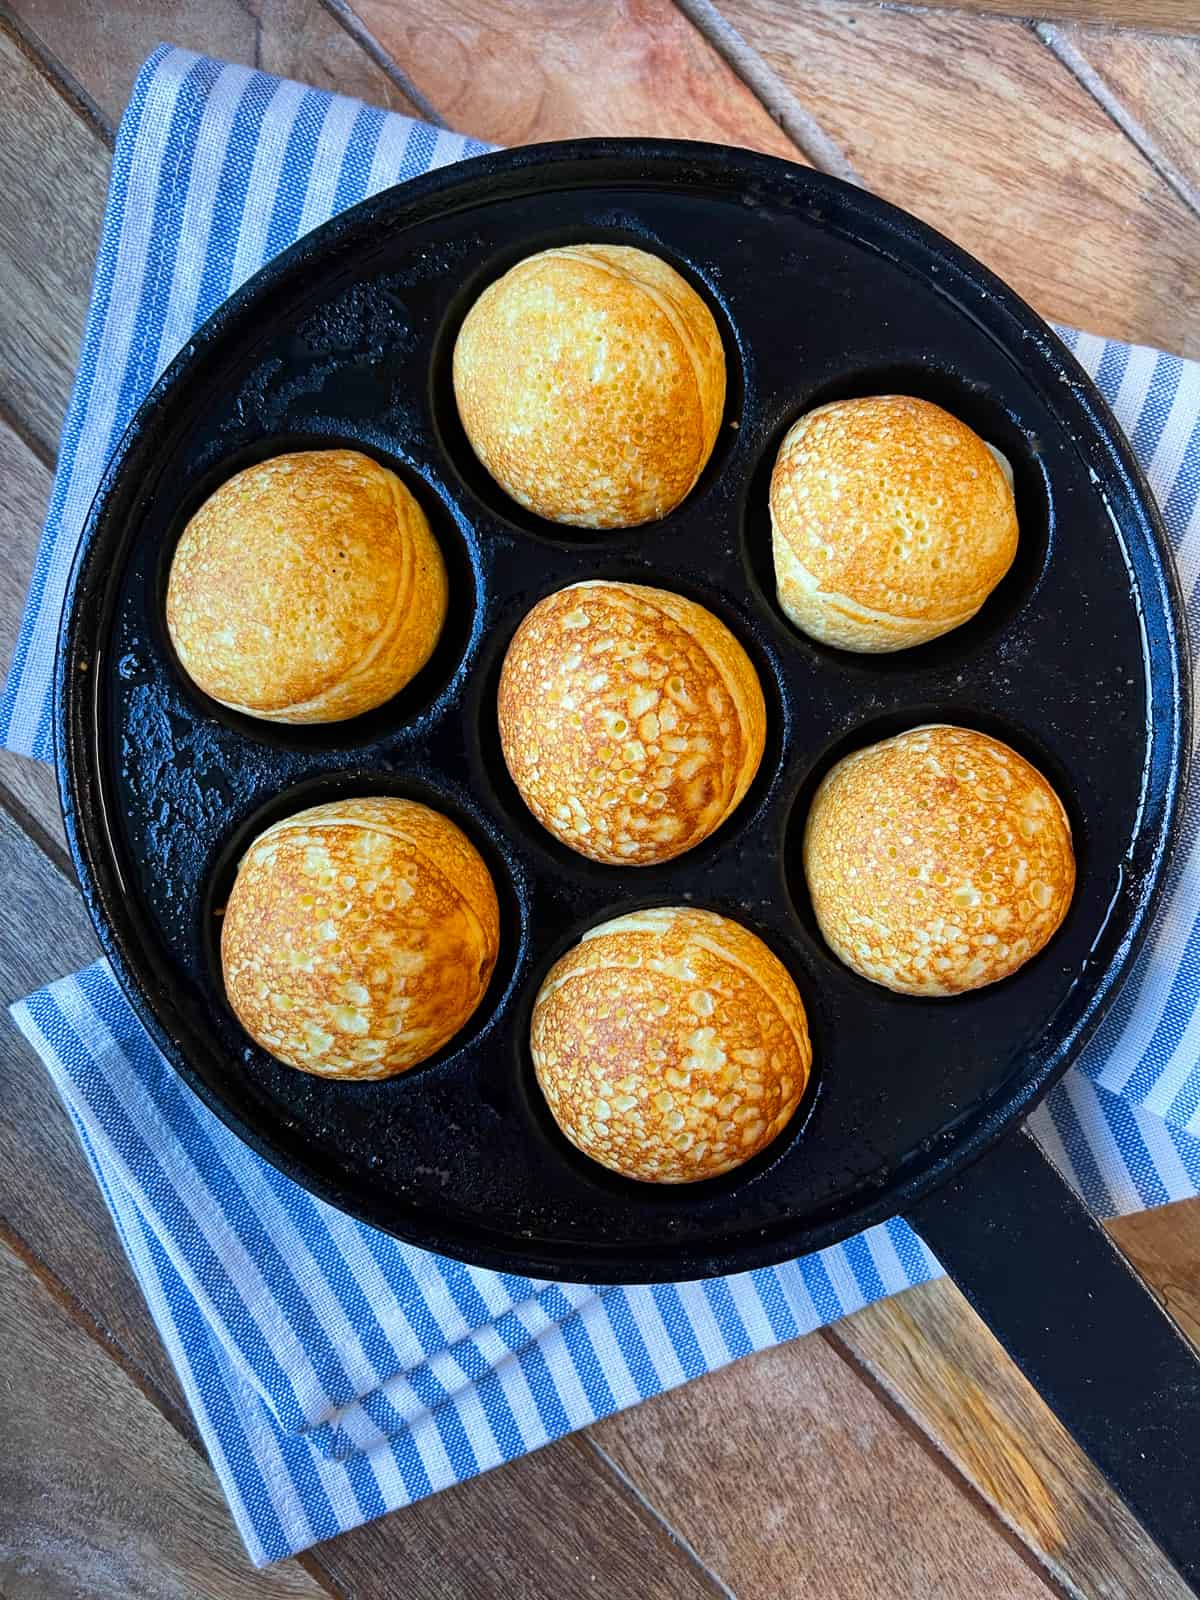 gluten free aebleskiver recipe post gf ebelskivers danish donut balls easy best traditional authentic